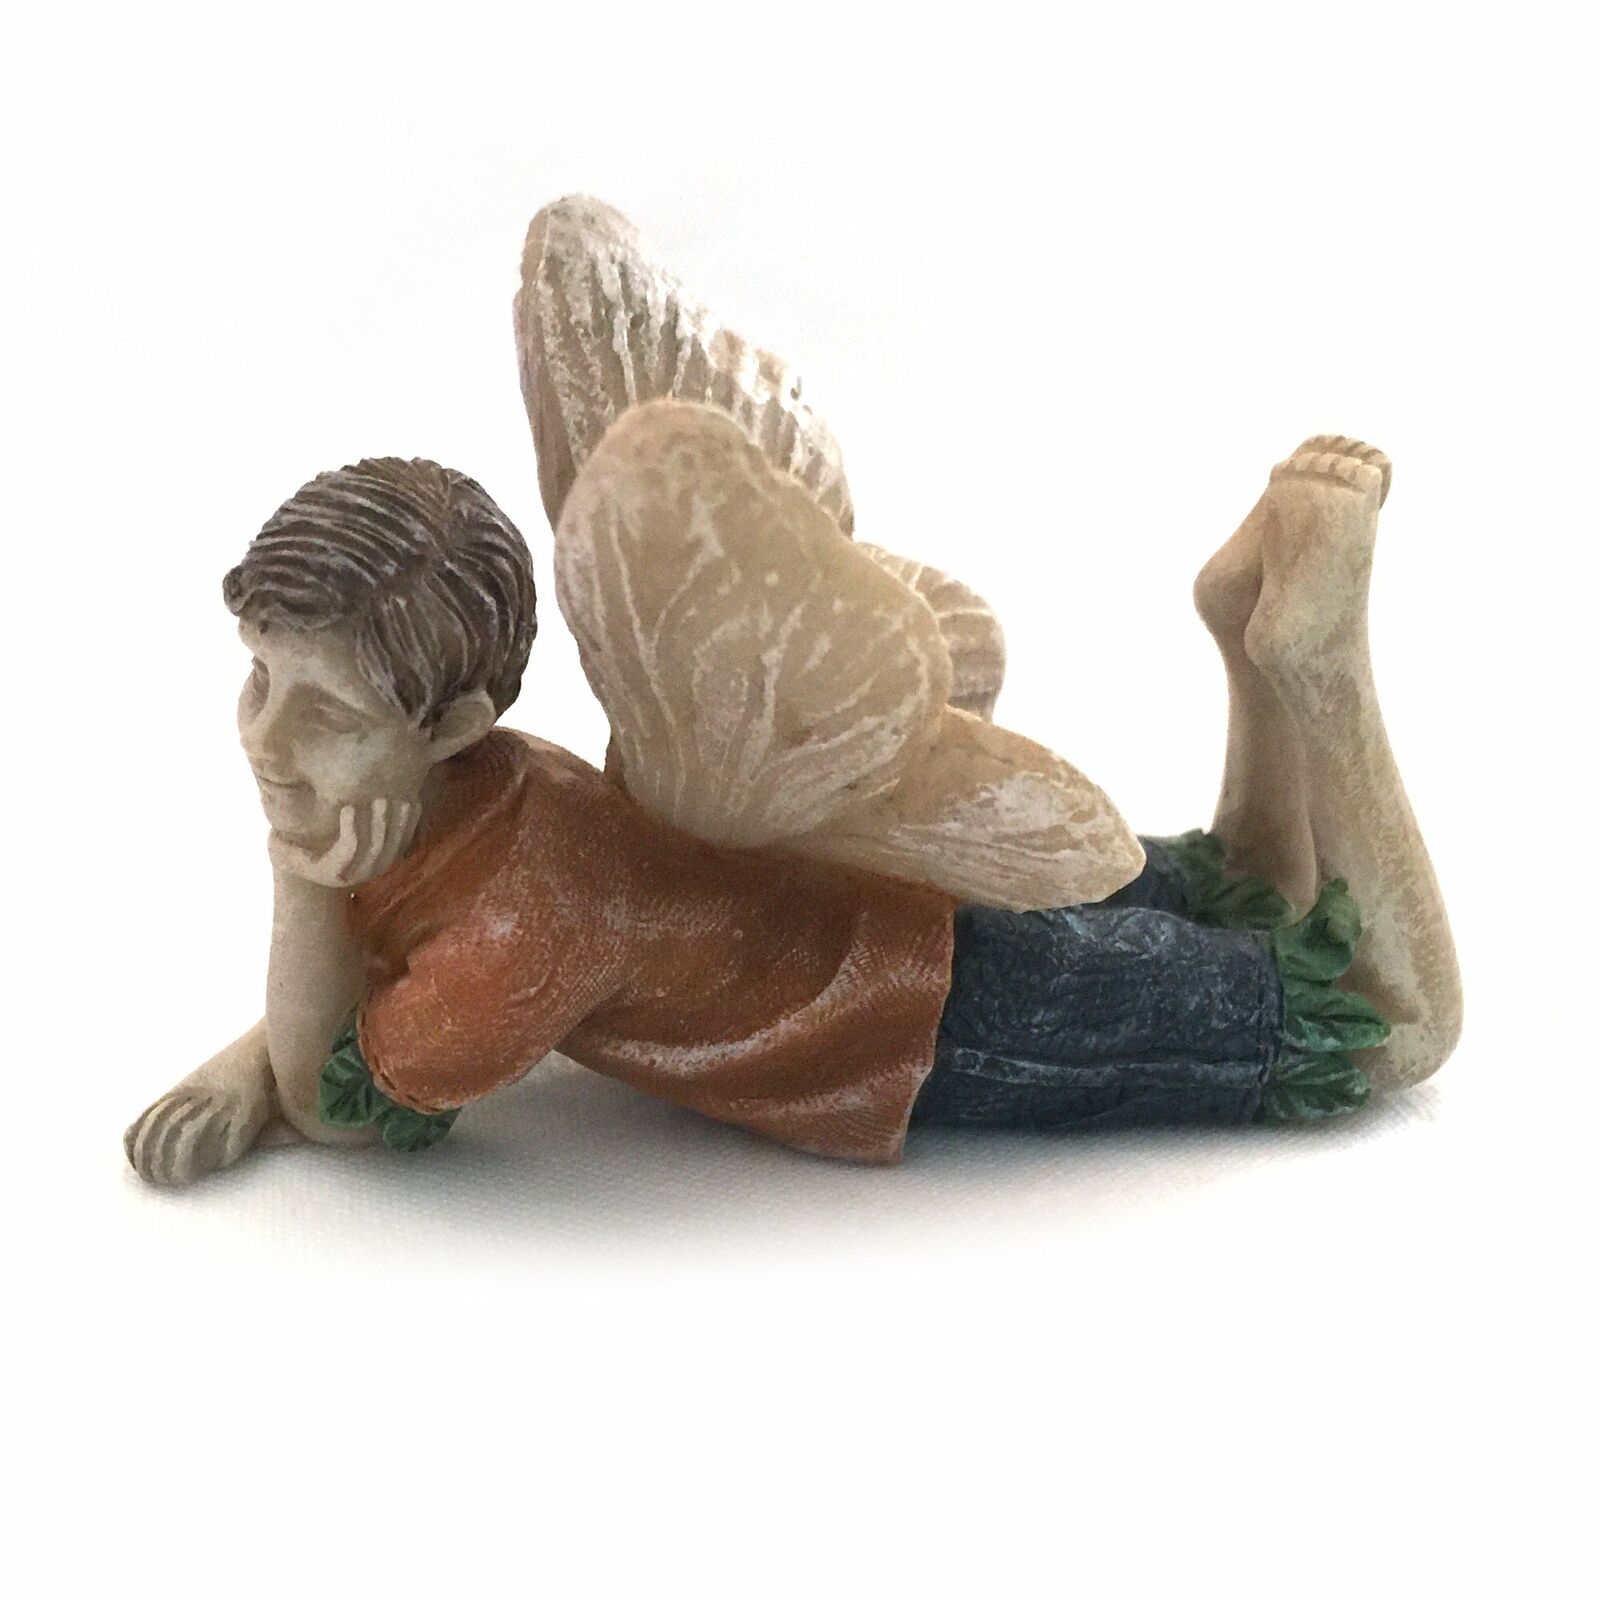 Miniature Fairy Garden Boy Fairy Figurine “Kingston” Limited Edition